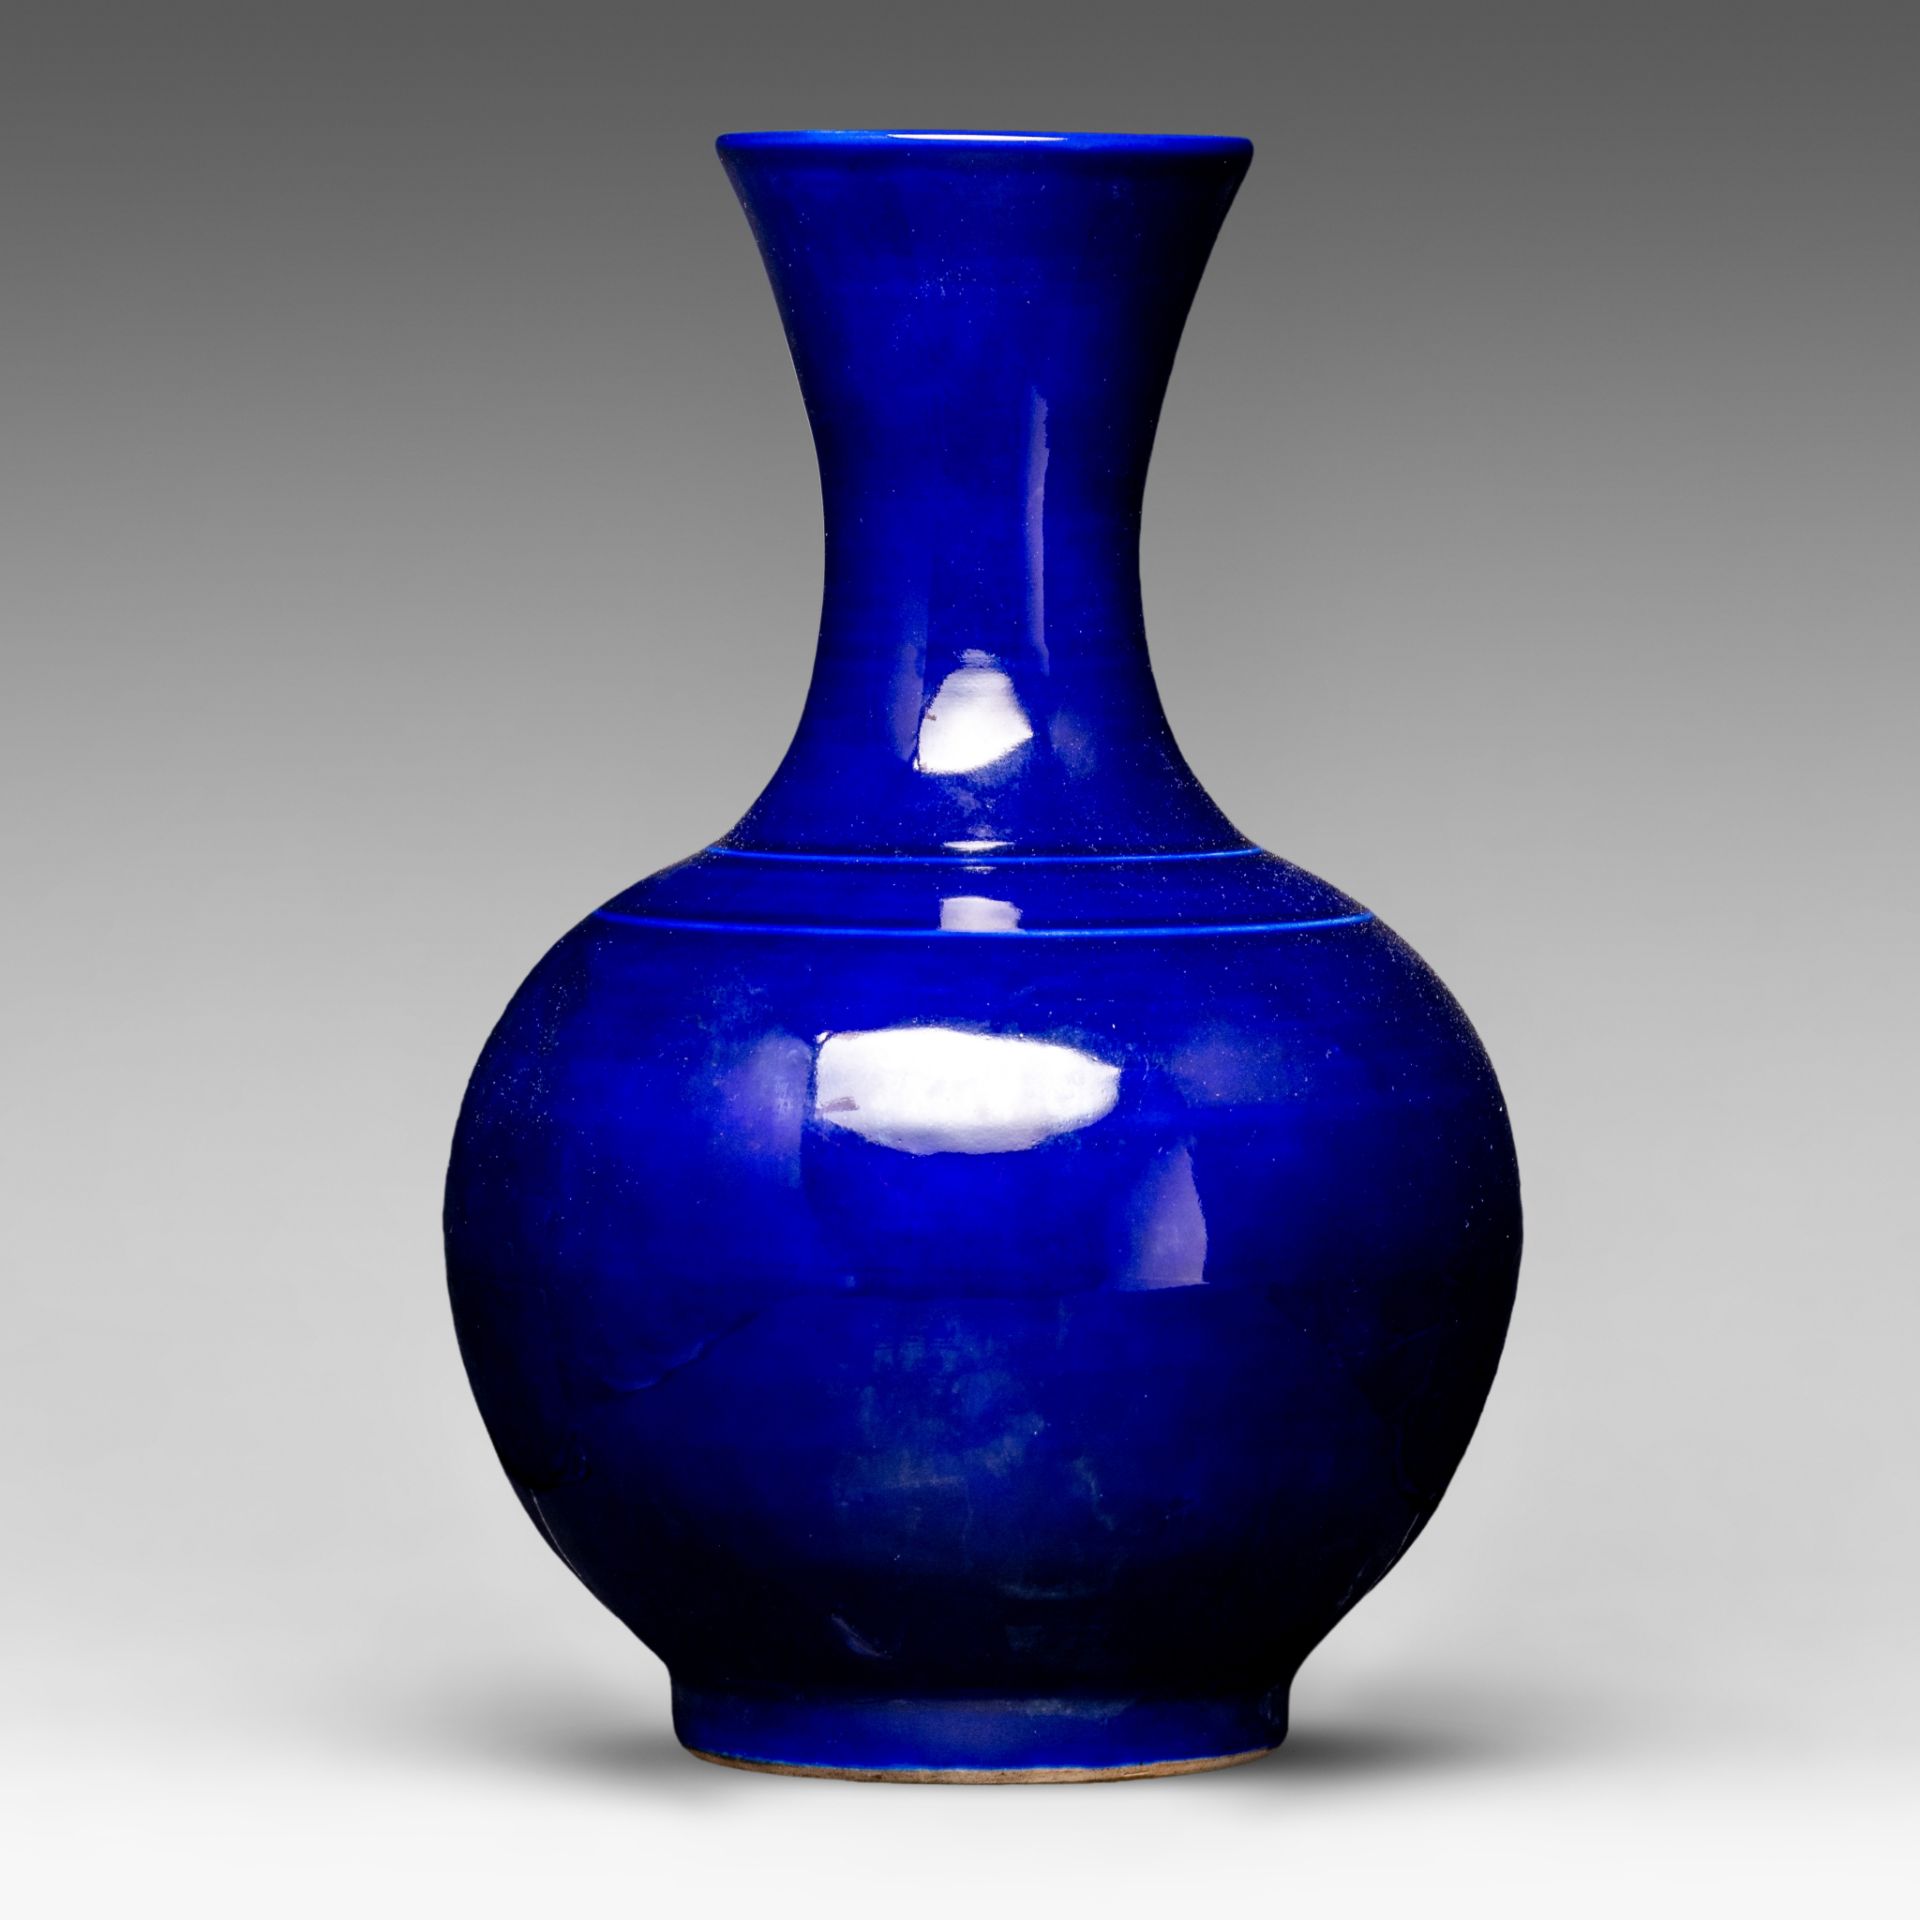 A Chinese monochrome sacrificial blue-glazed bottle vase, 20thC, H 33,5 cm